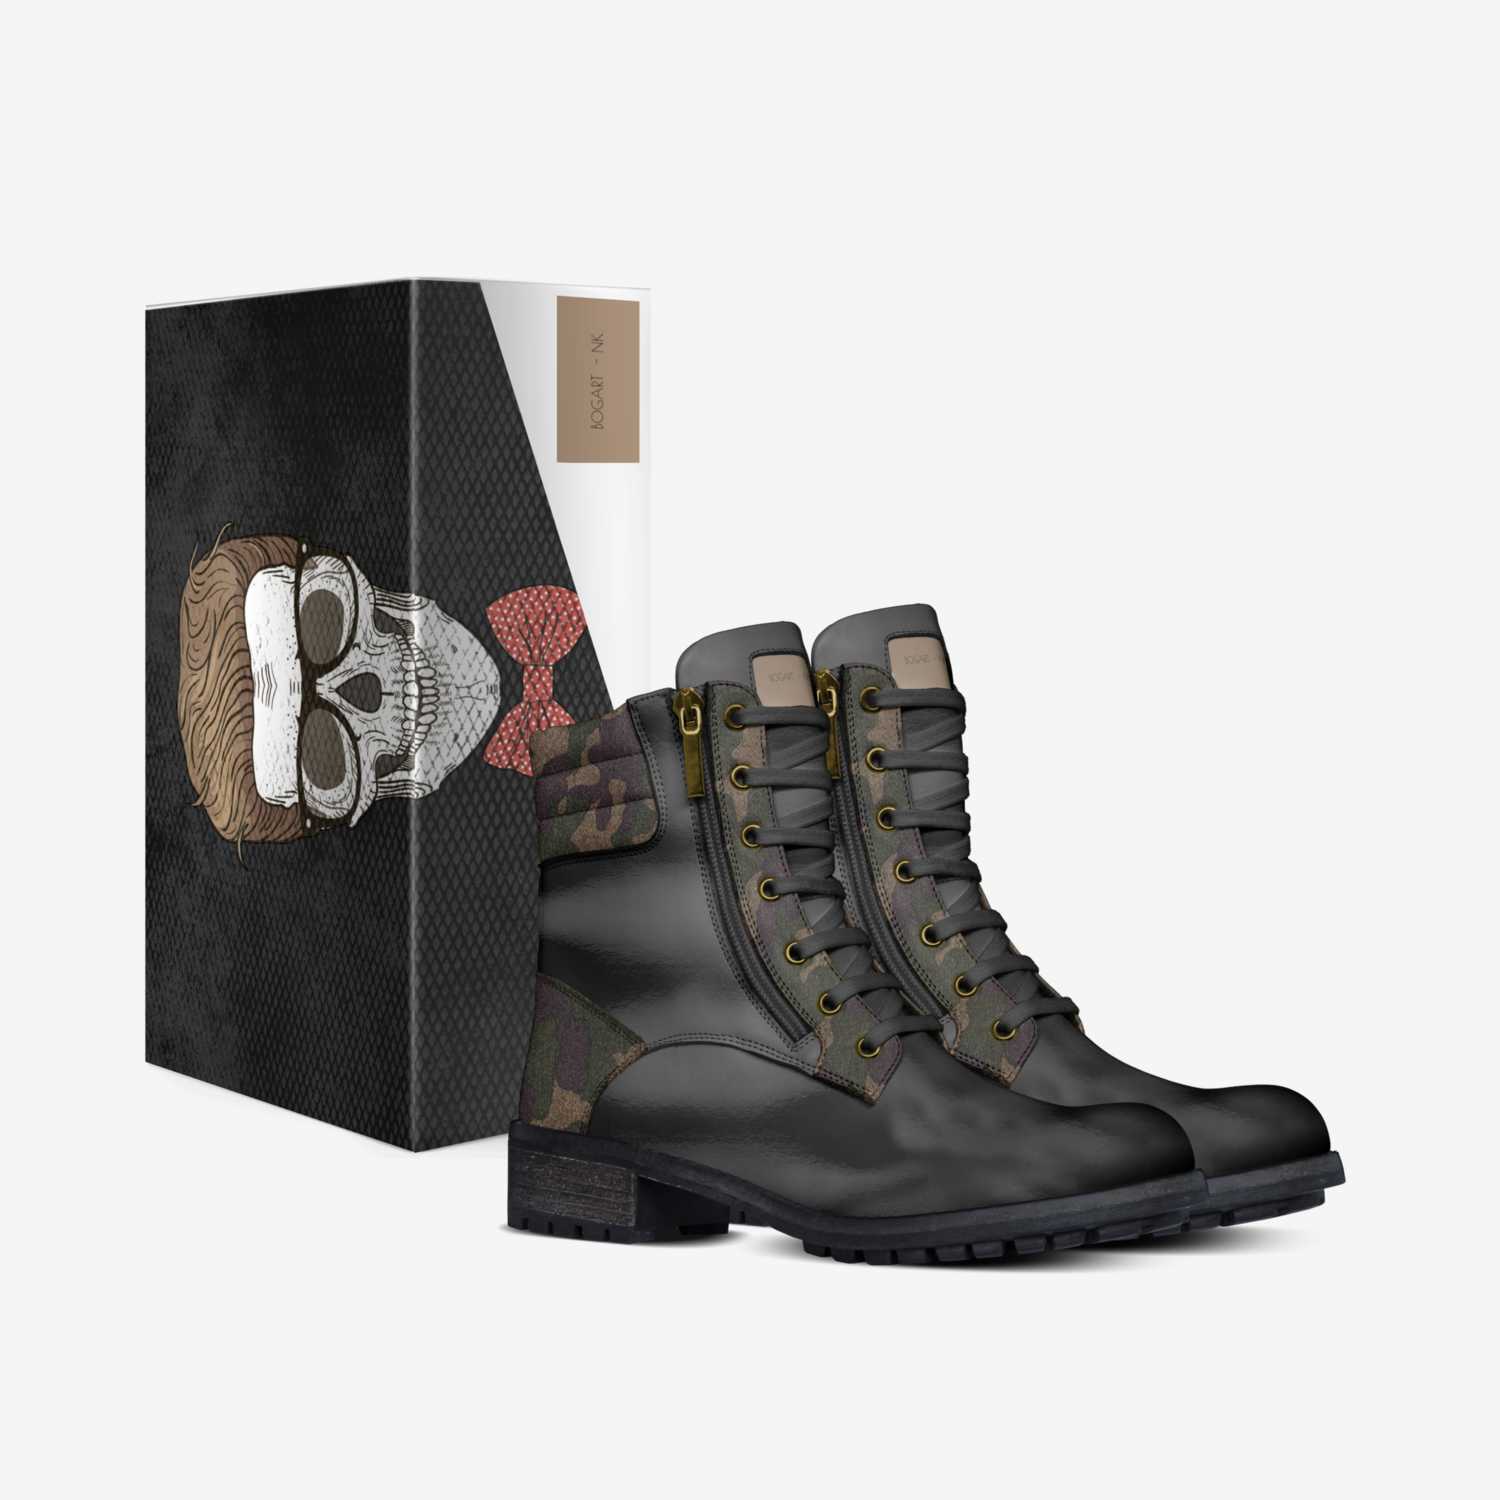 Nikita K custom made in Italy shoes by Nikita K | Box view